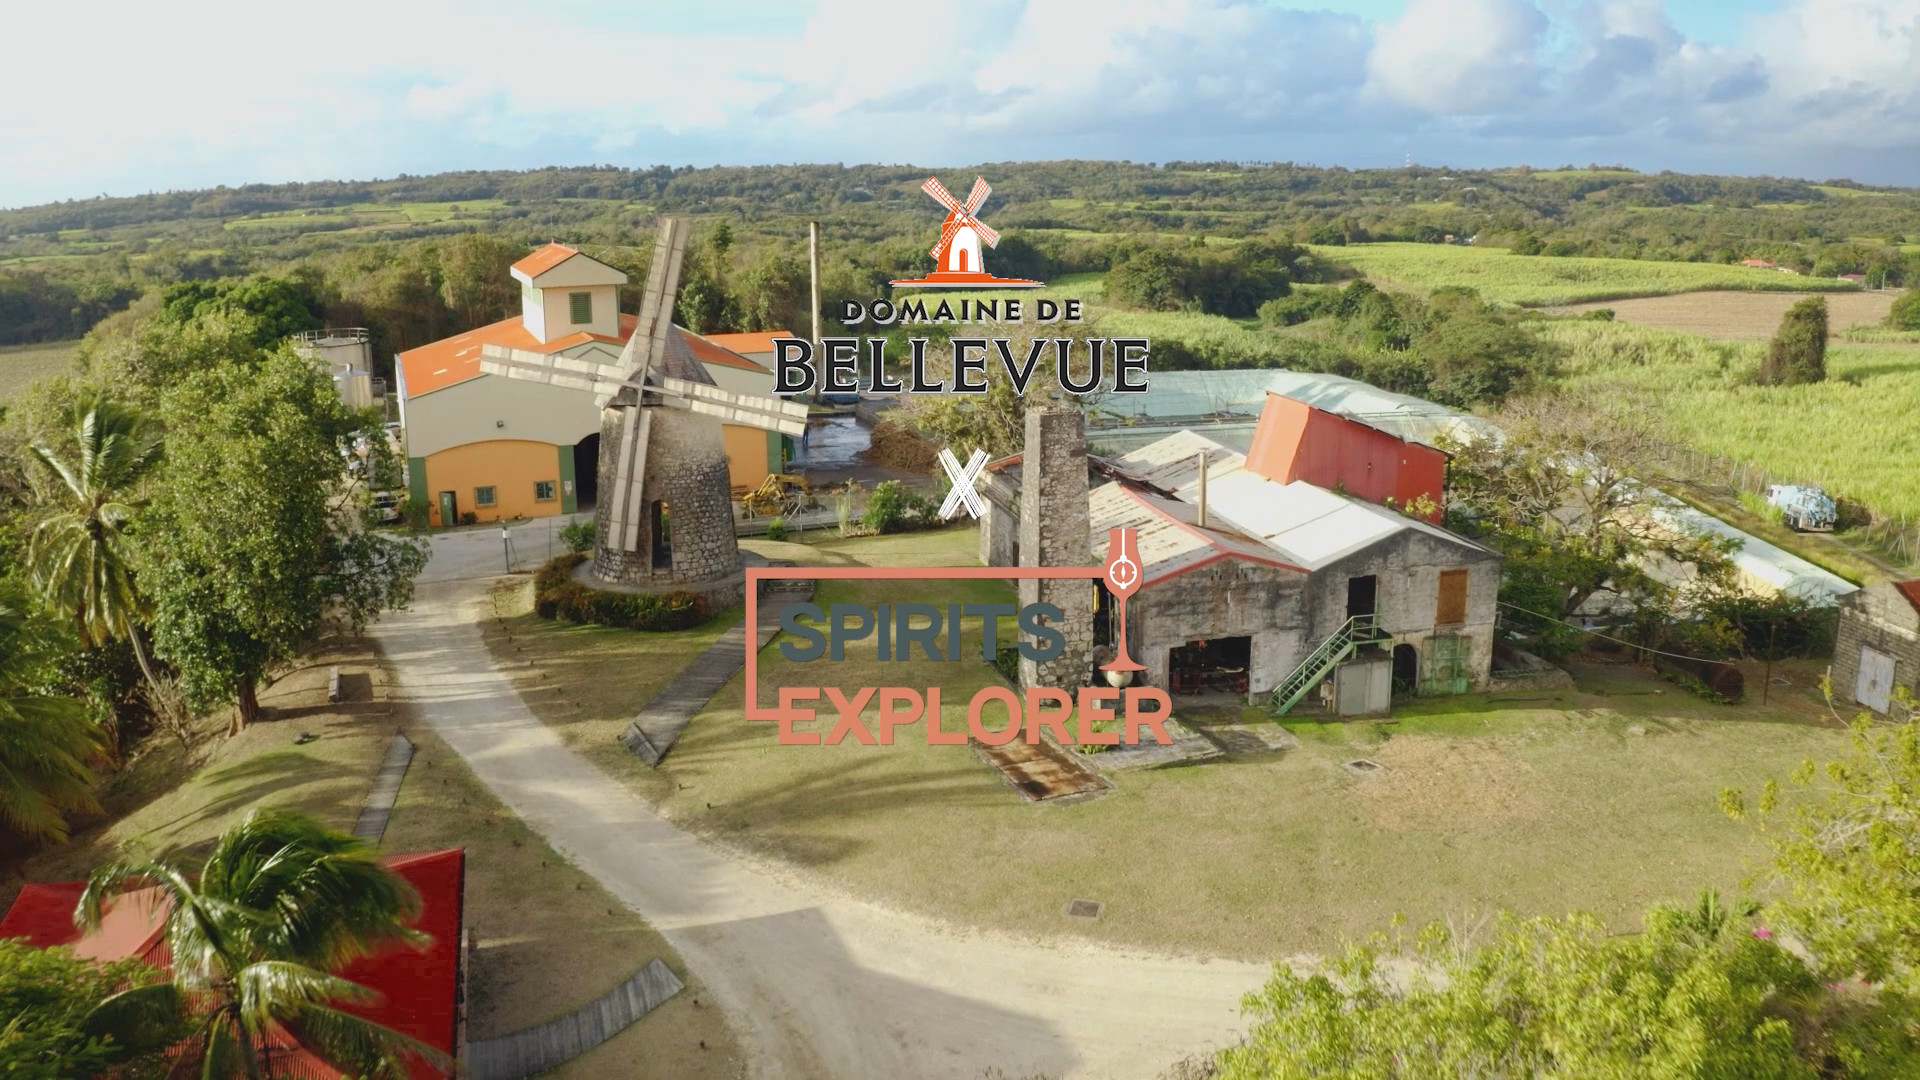 Spirits Explorer in Guadeloupe Episode 1 – Habitation Bellevue